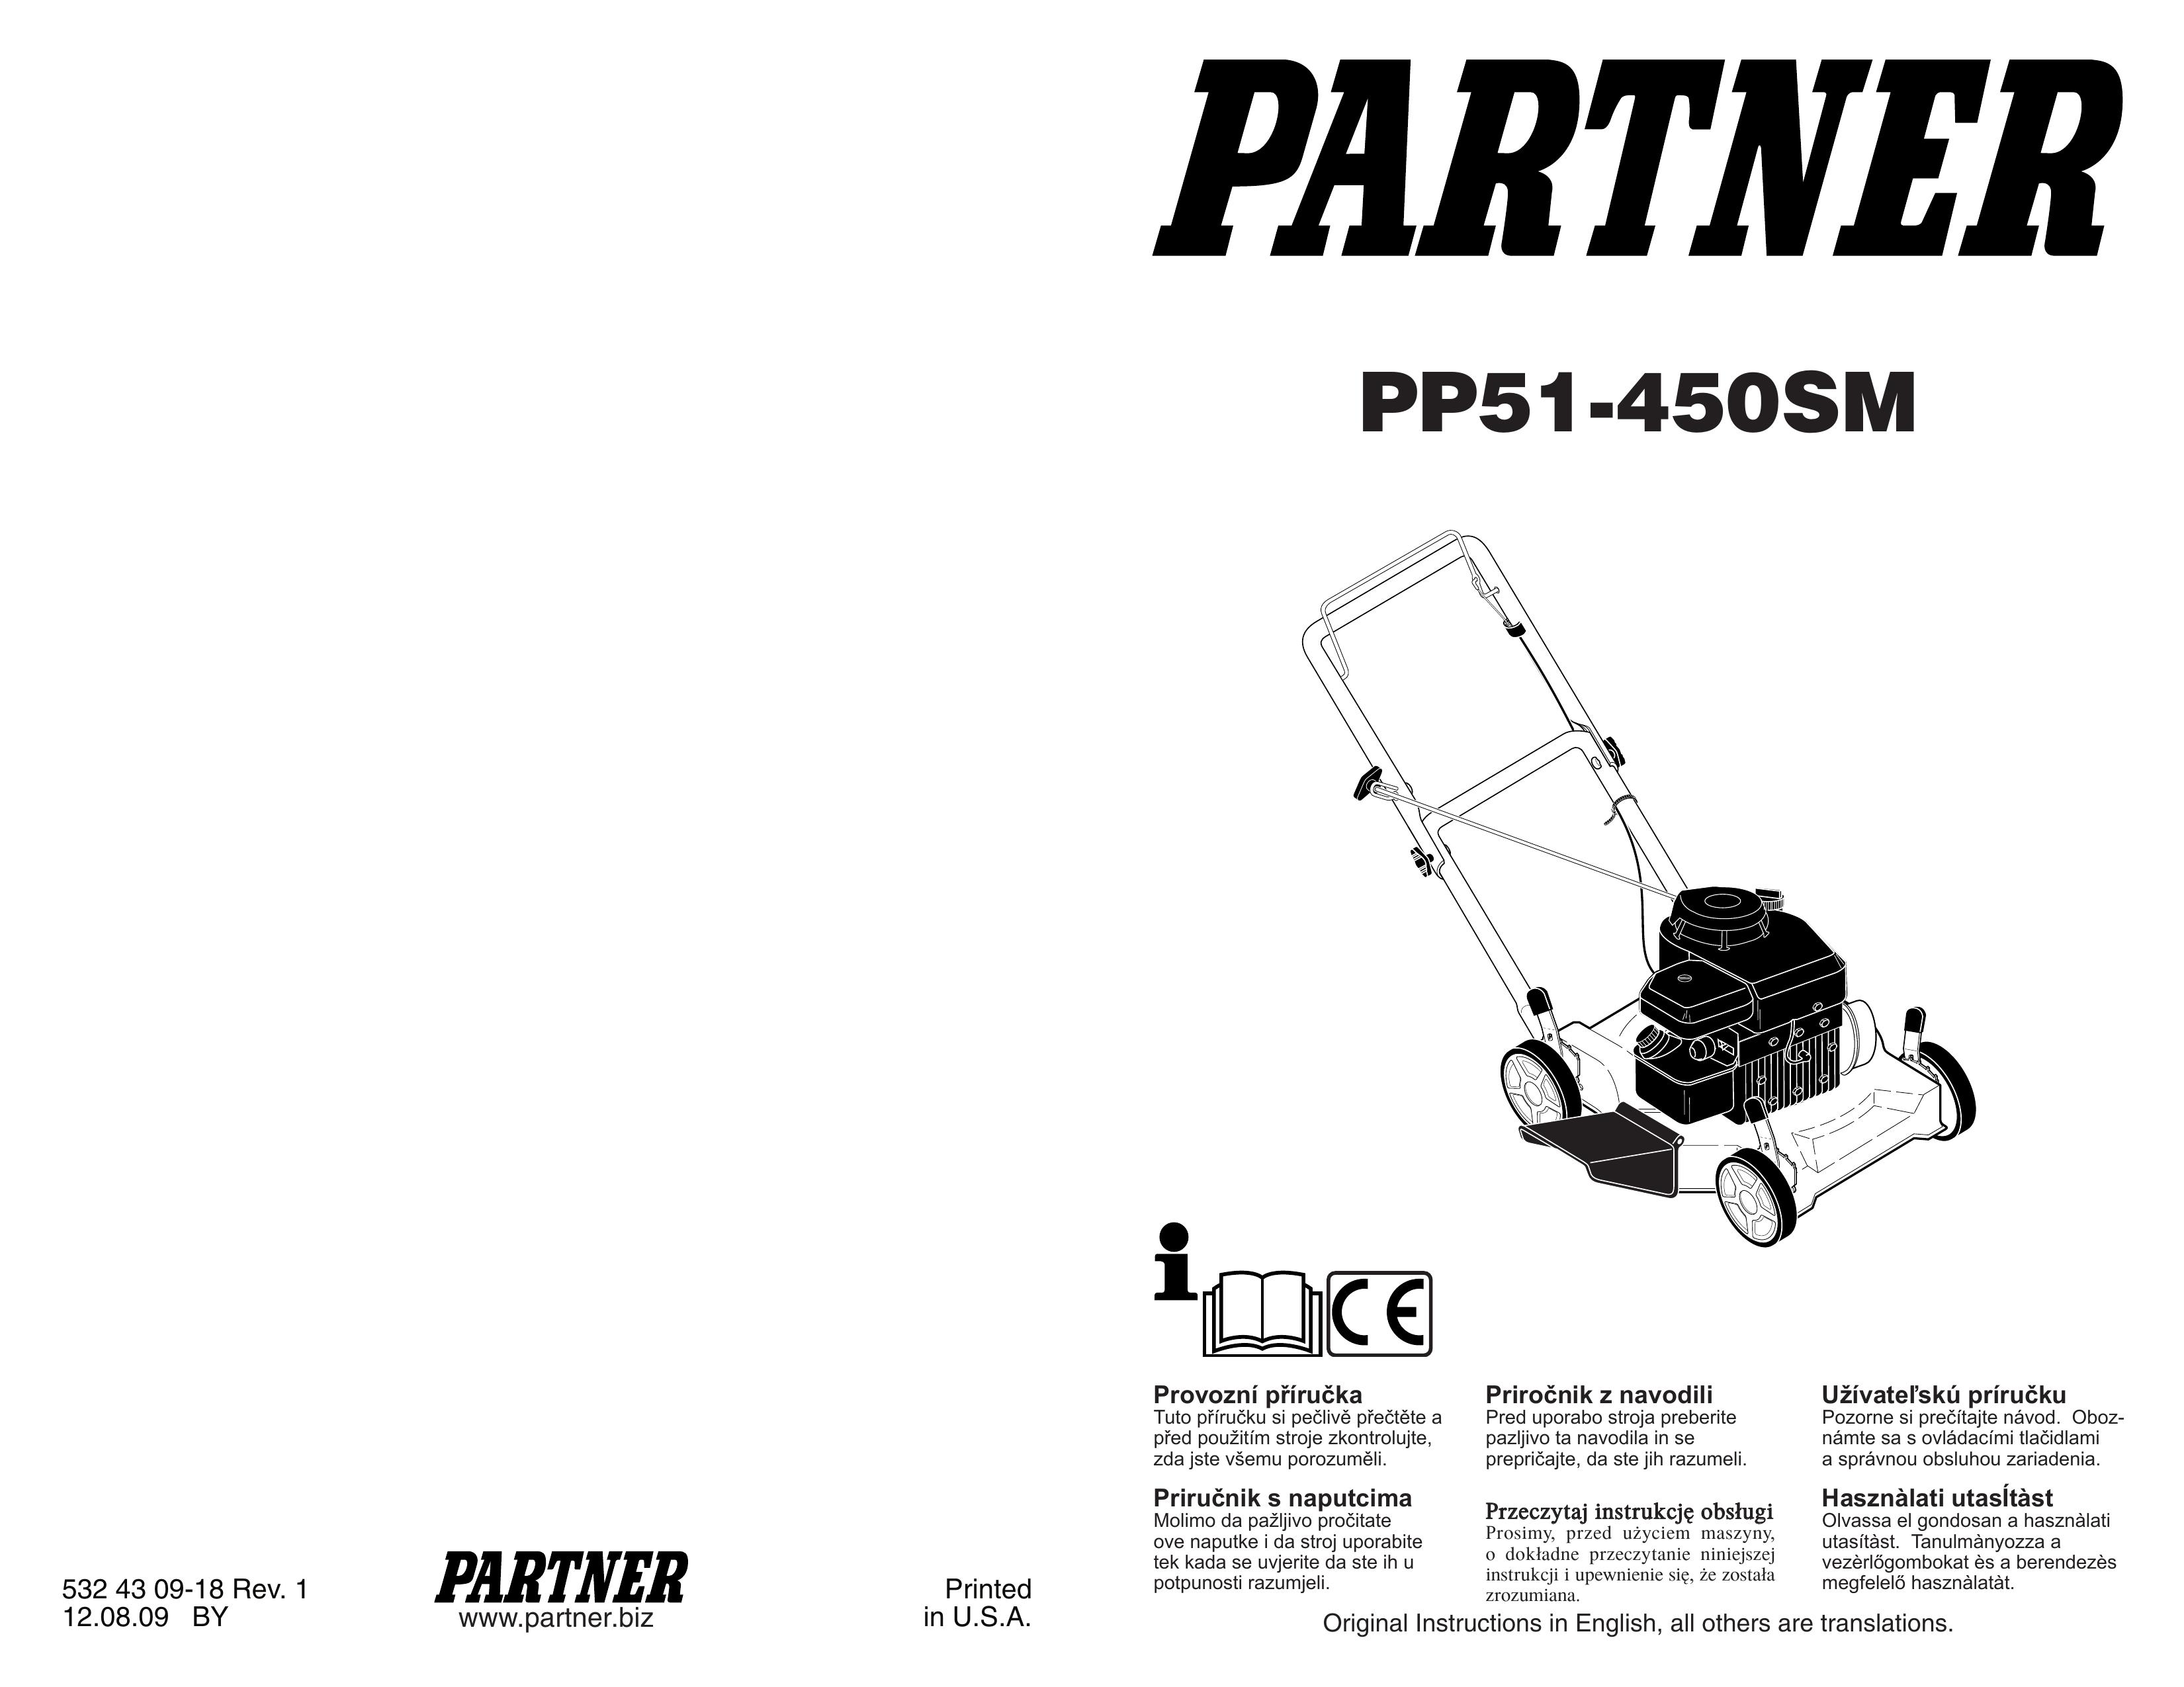 Partner Tech PP51-450SM Lawn Mower User Manual